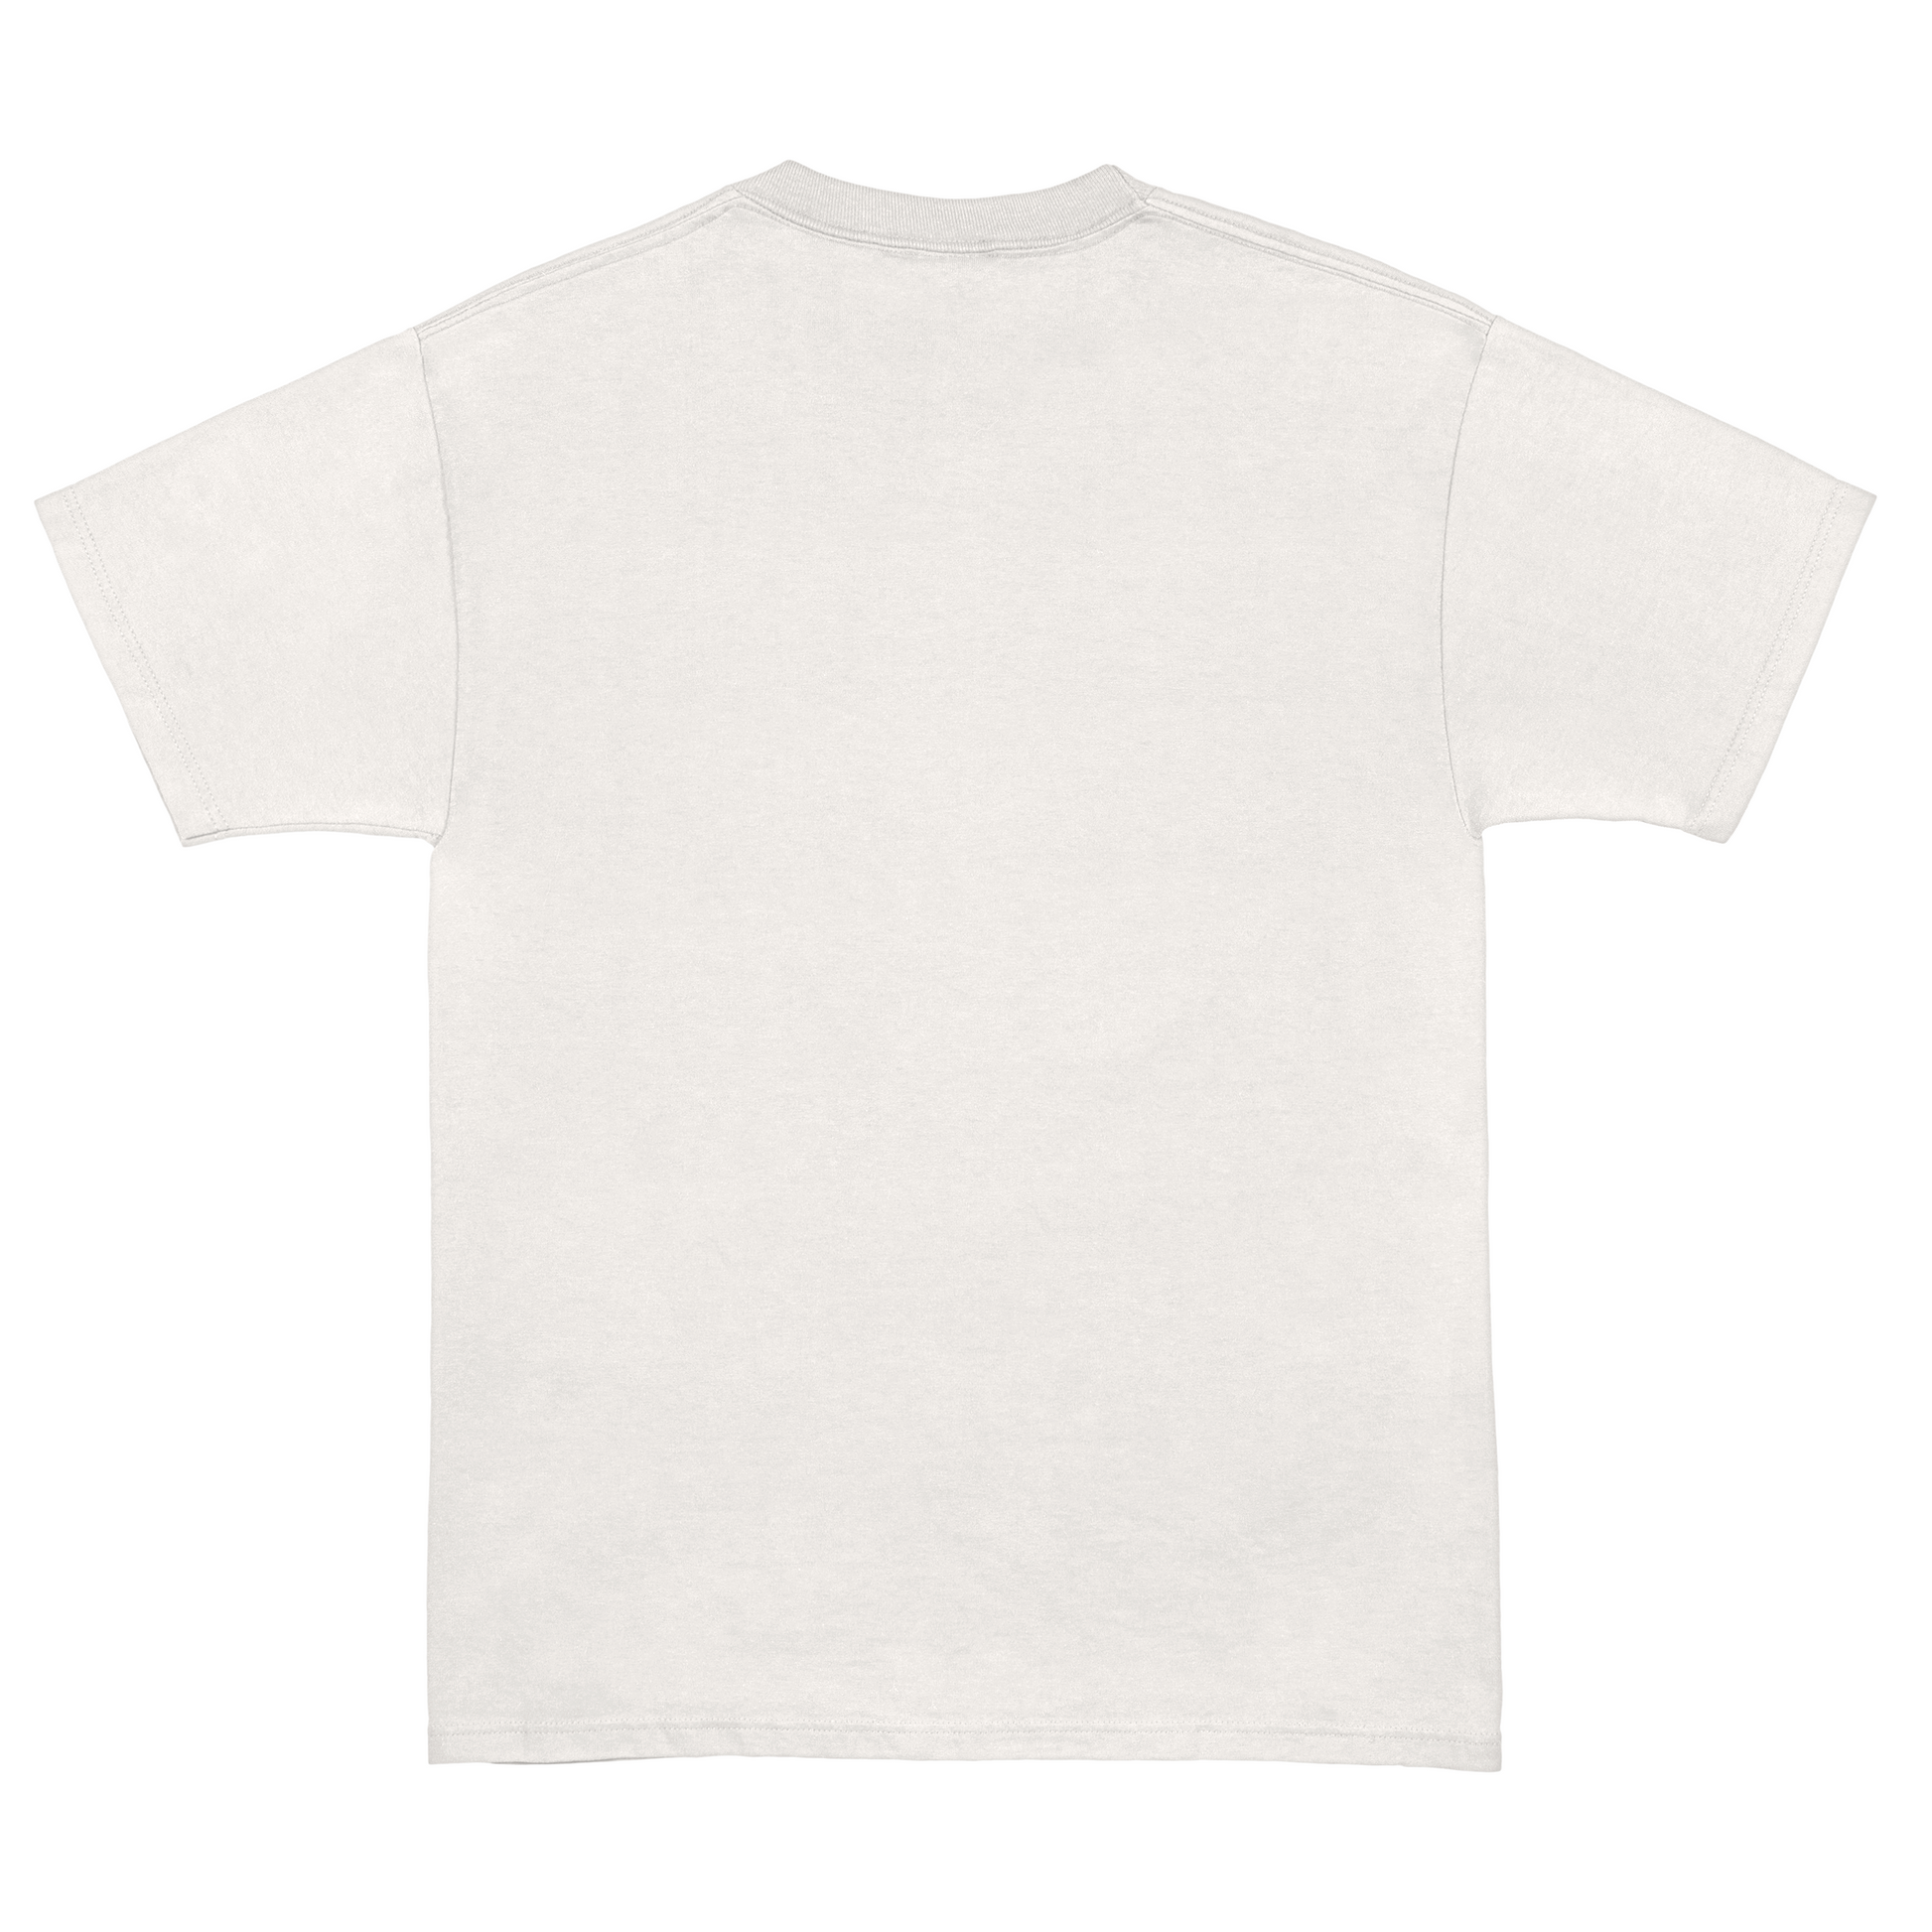 Back view of 10 Hills Studio Unisex 'Savage' White Boxy T-Shirt